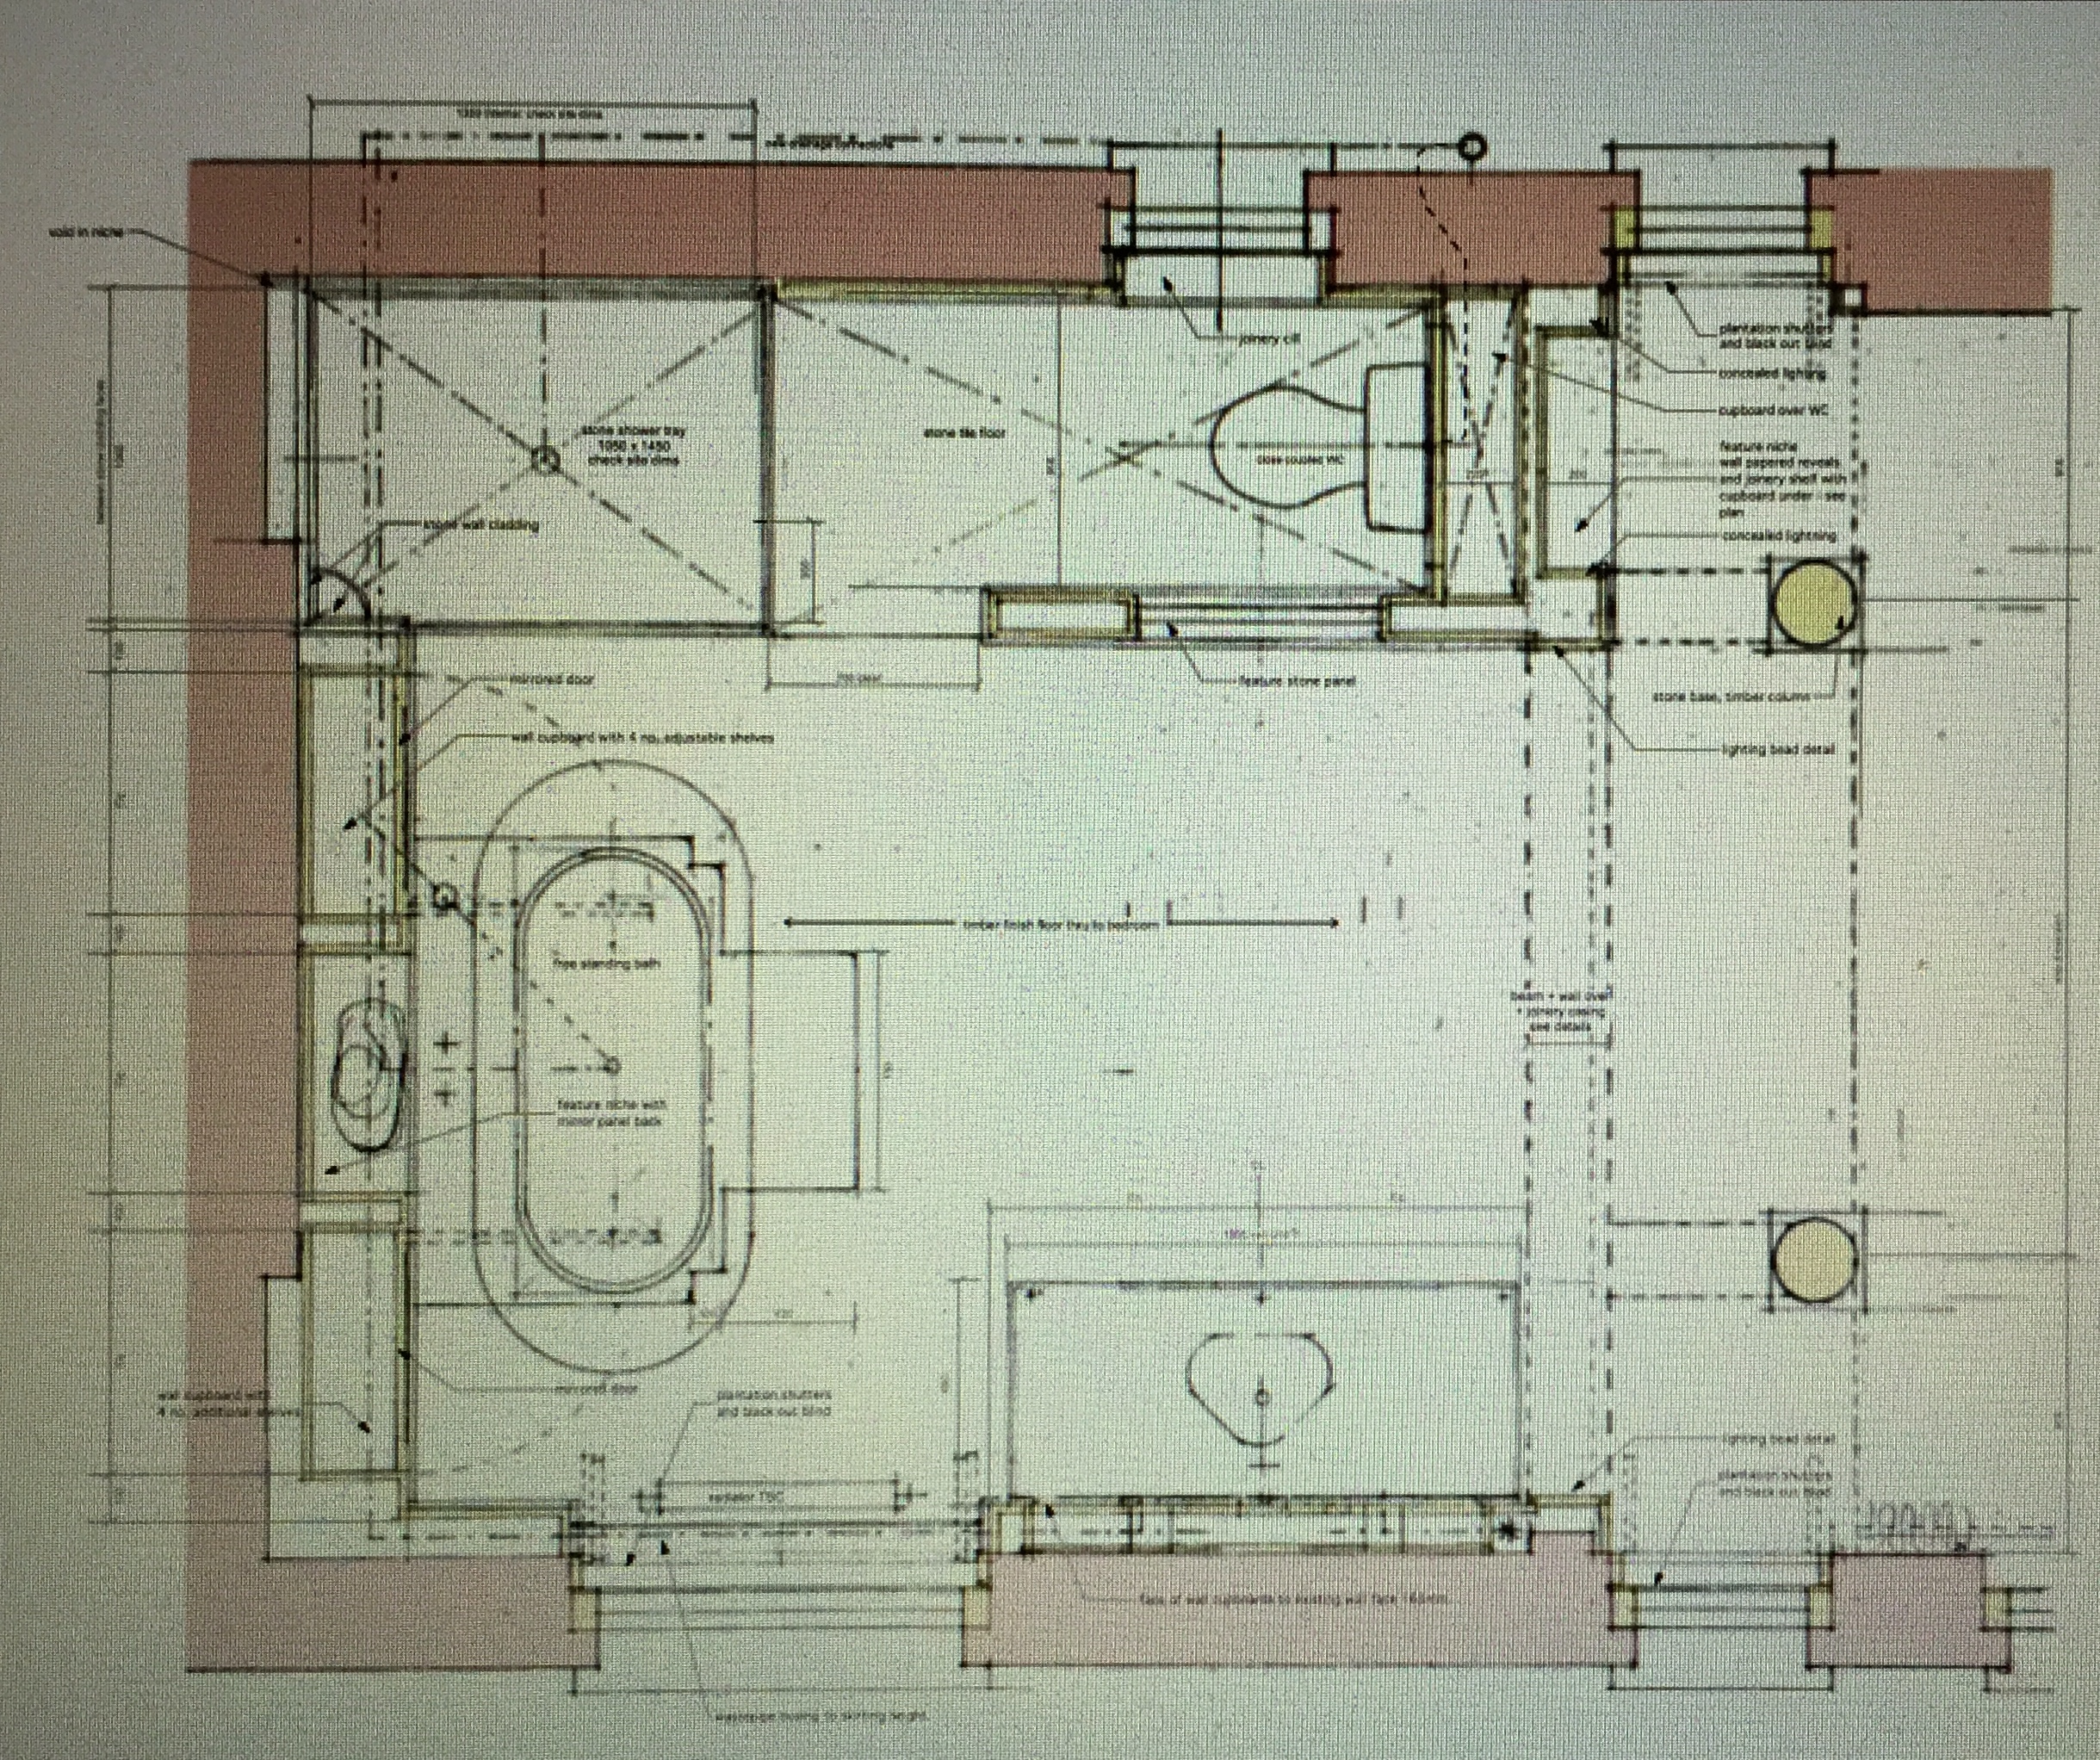 16. Floorplan for plumbing installation